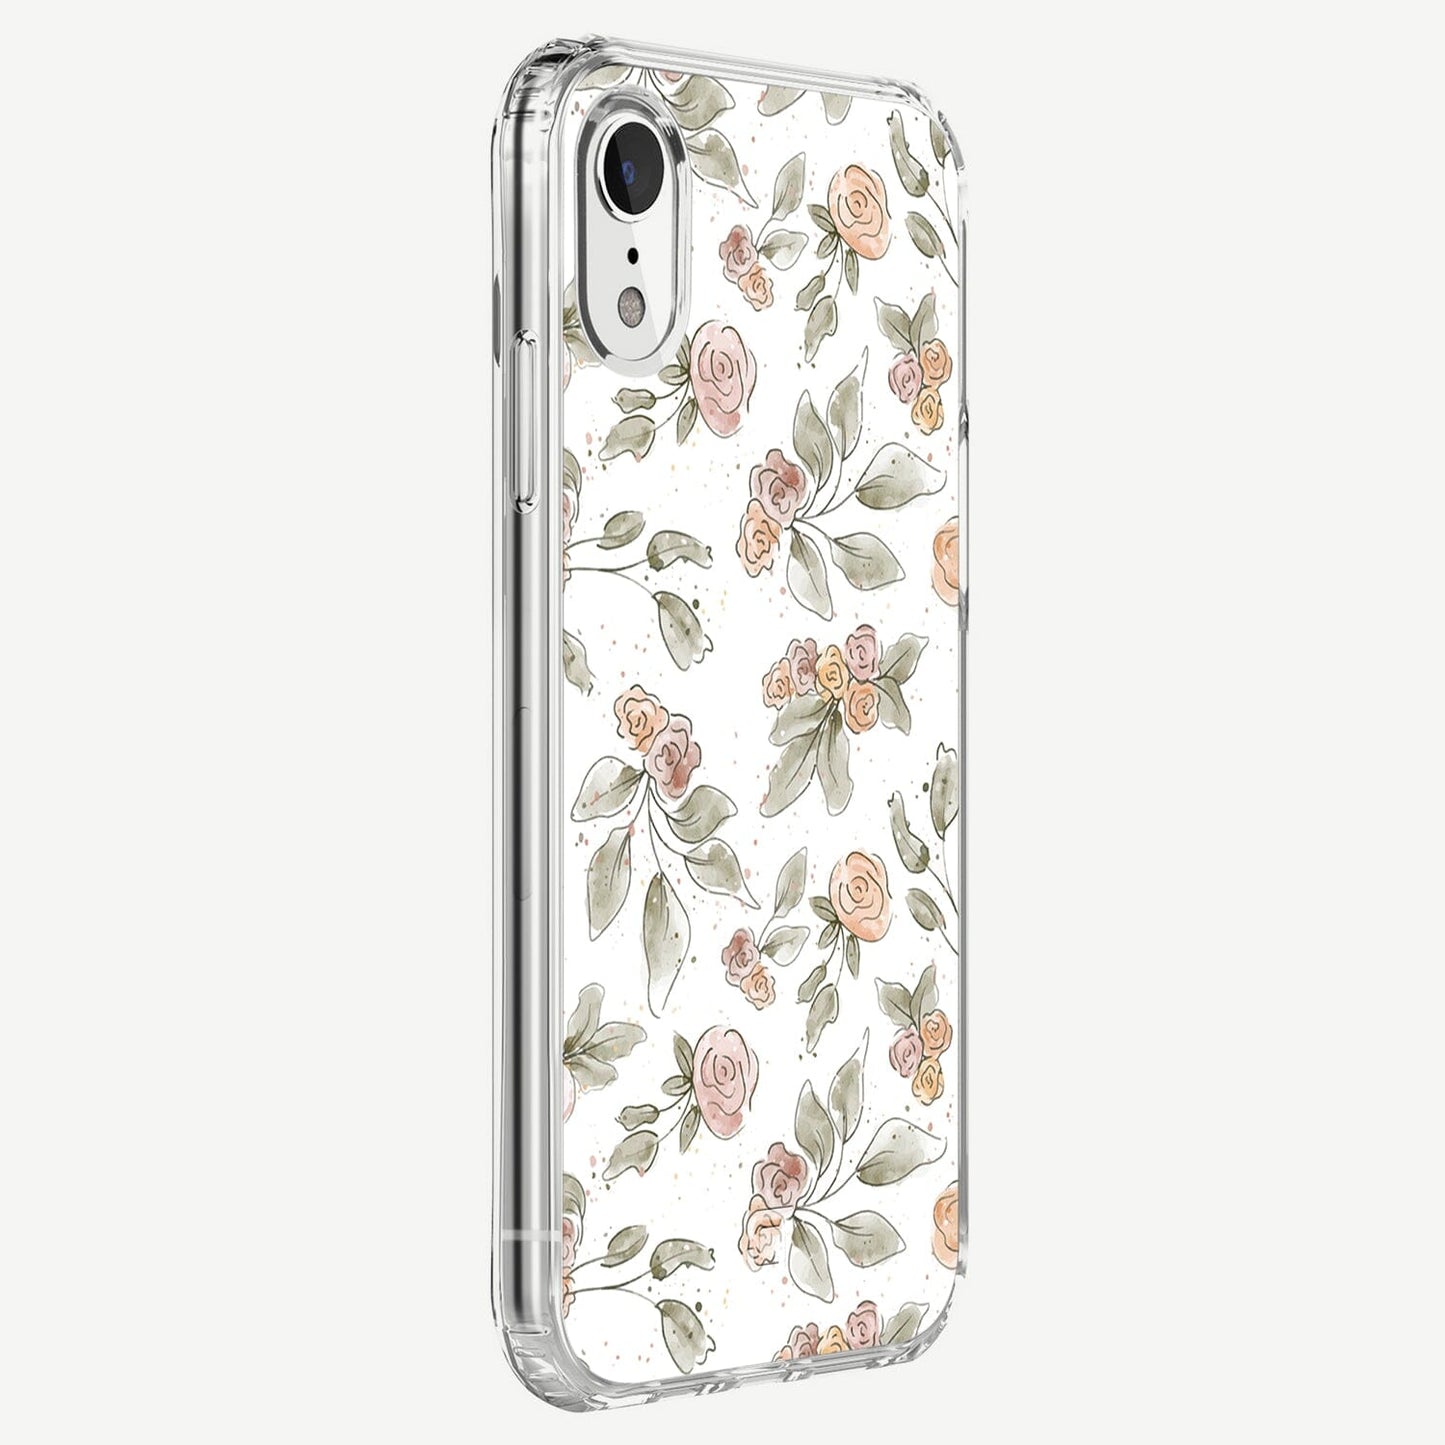 iPhone XR Case - Rosette Floral Design